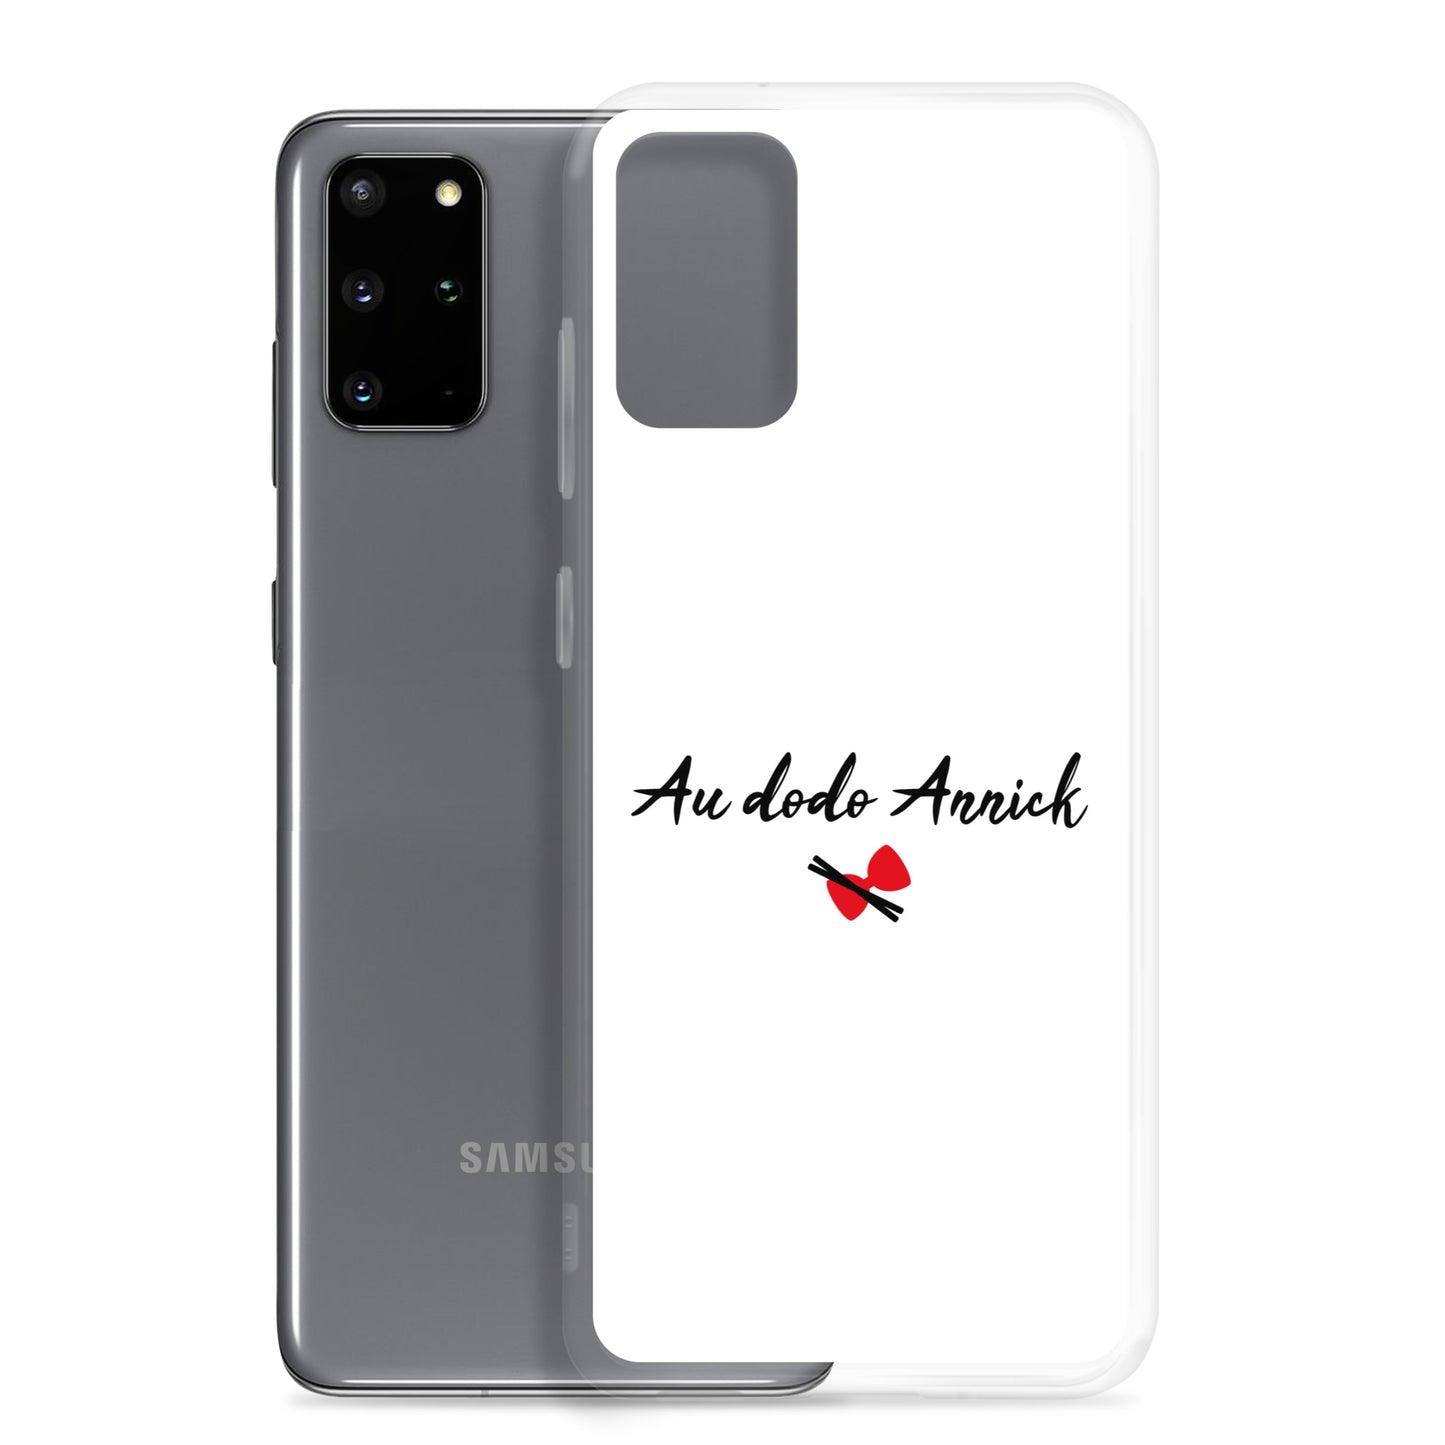 Coque Samsung Au dodo Annick - Sedurro